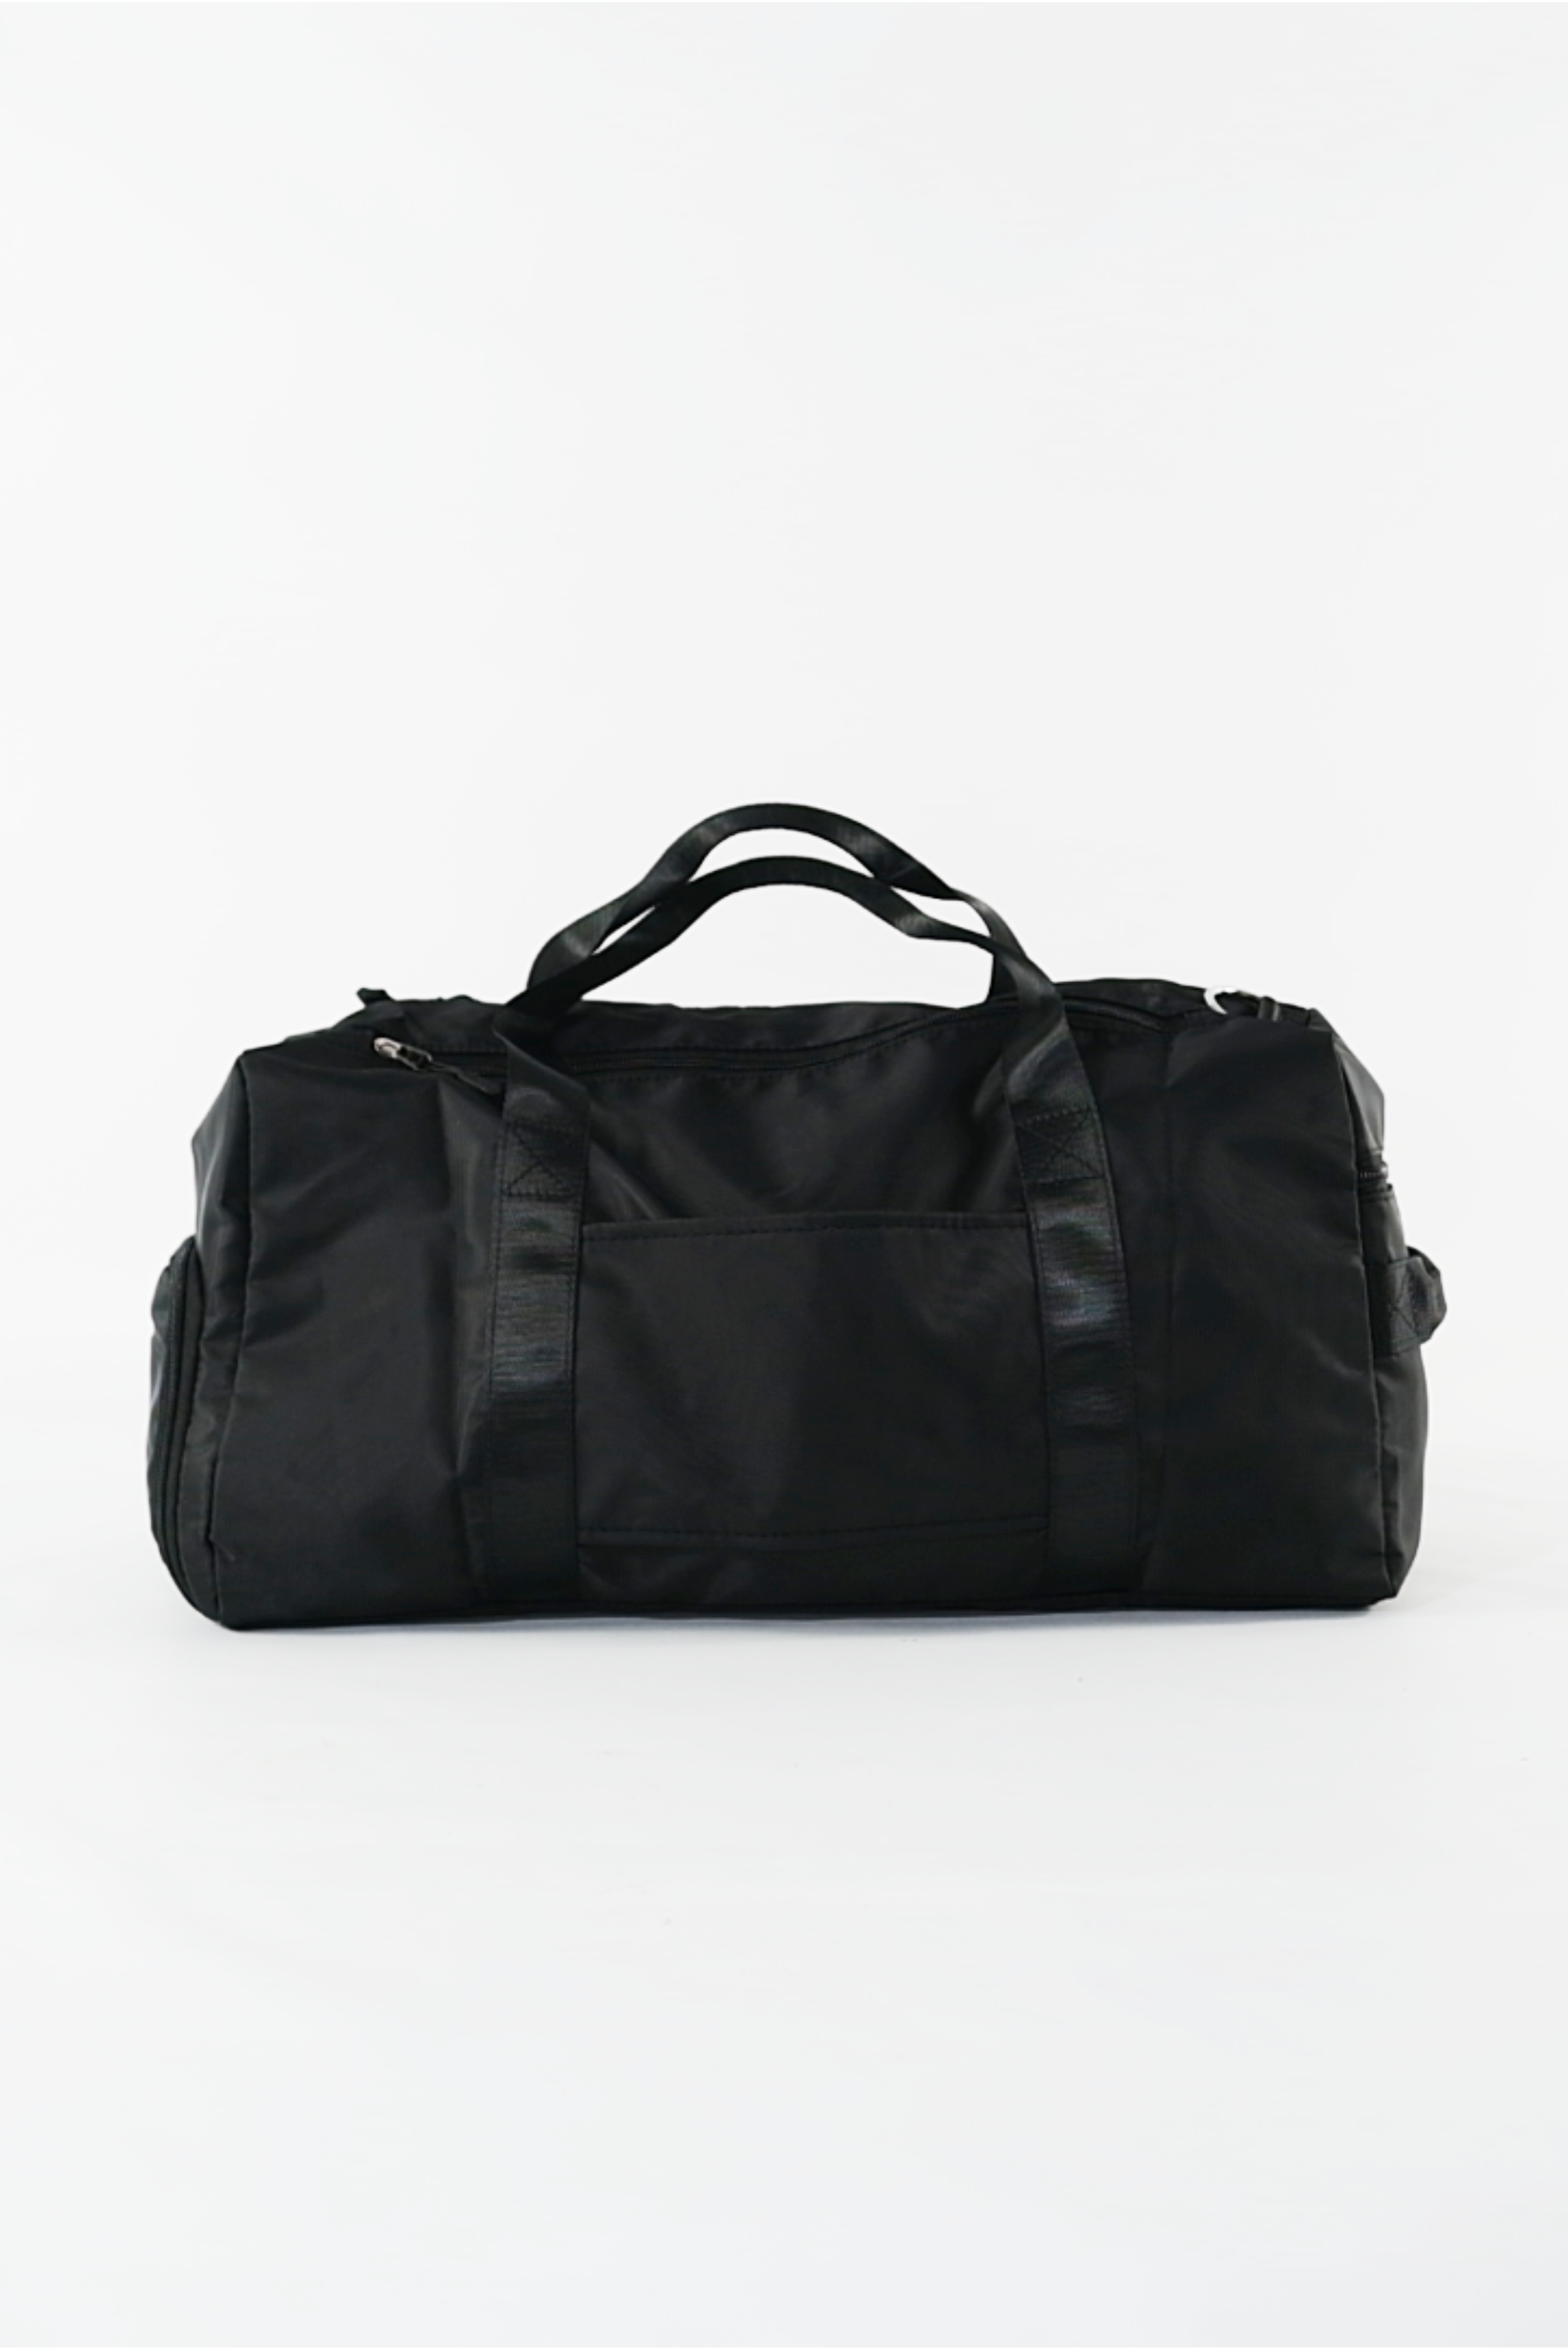 VIVID Duffle Bag